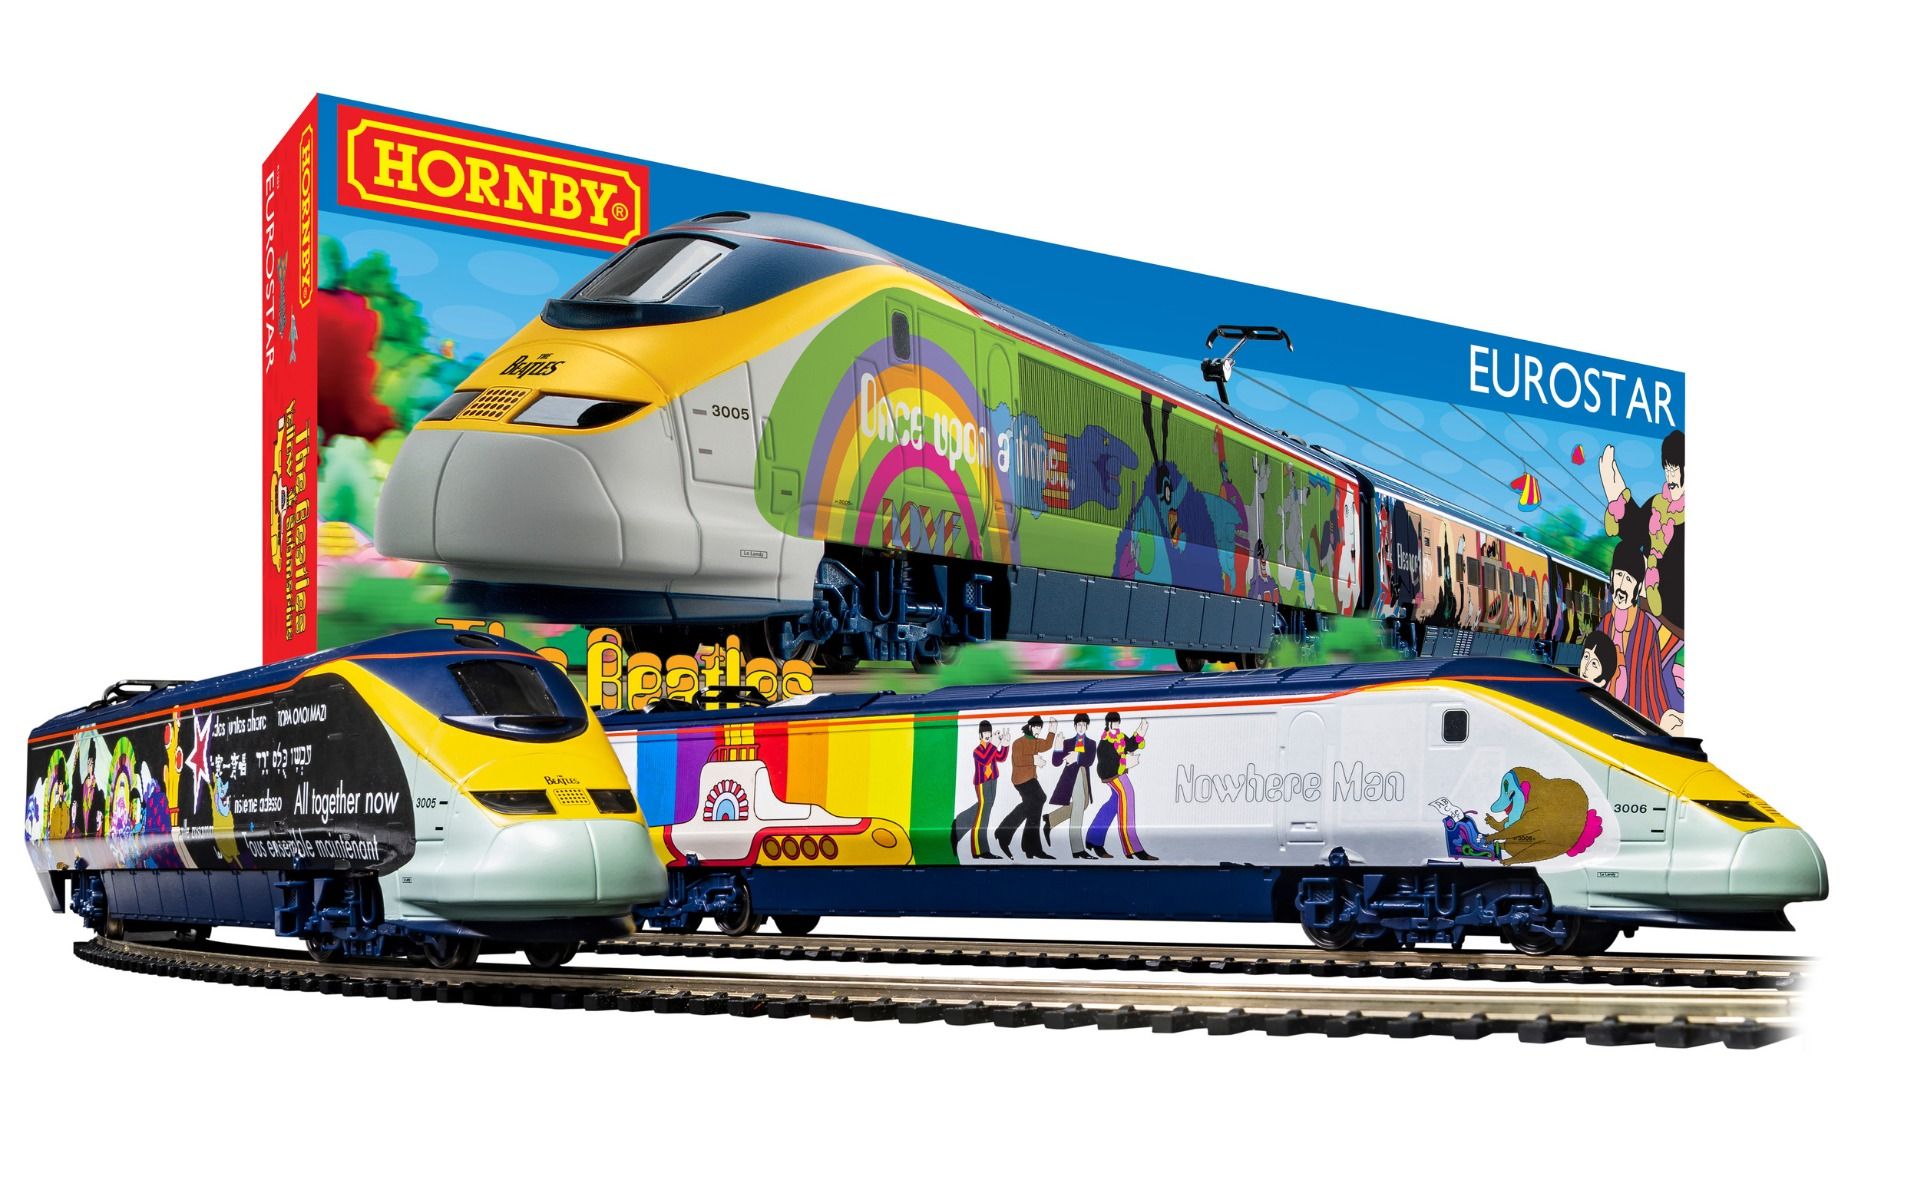  Eurostar 'Yellow Submarine' Train Set